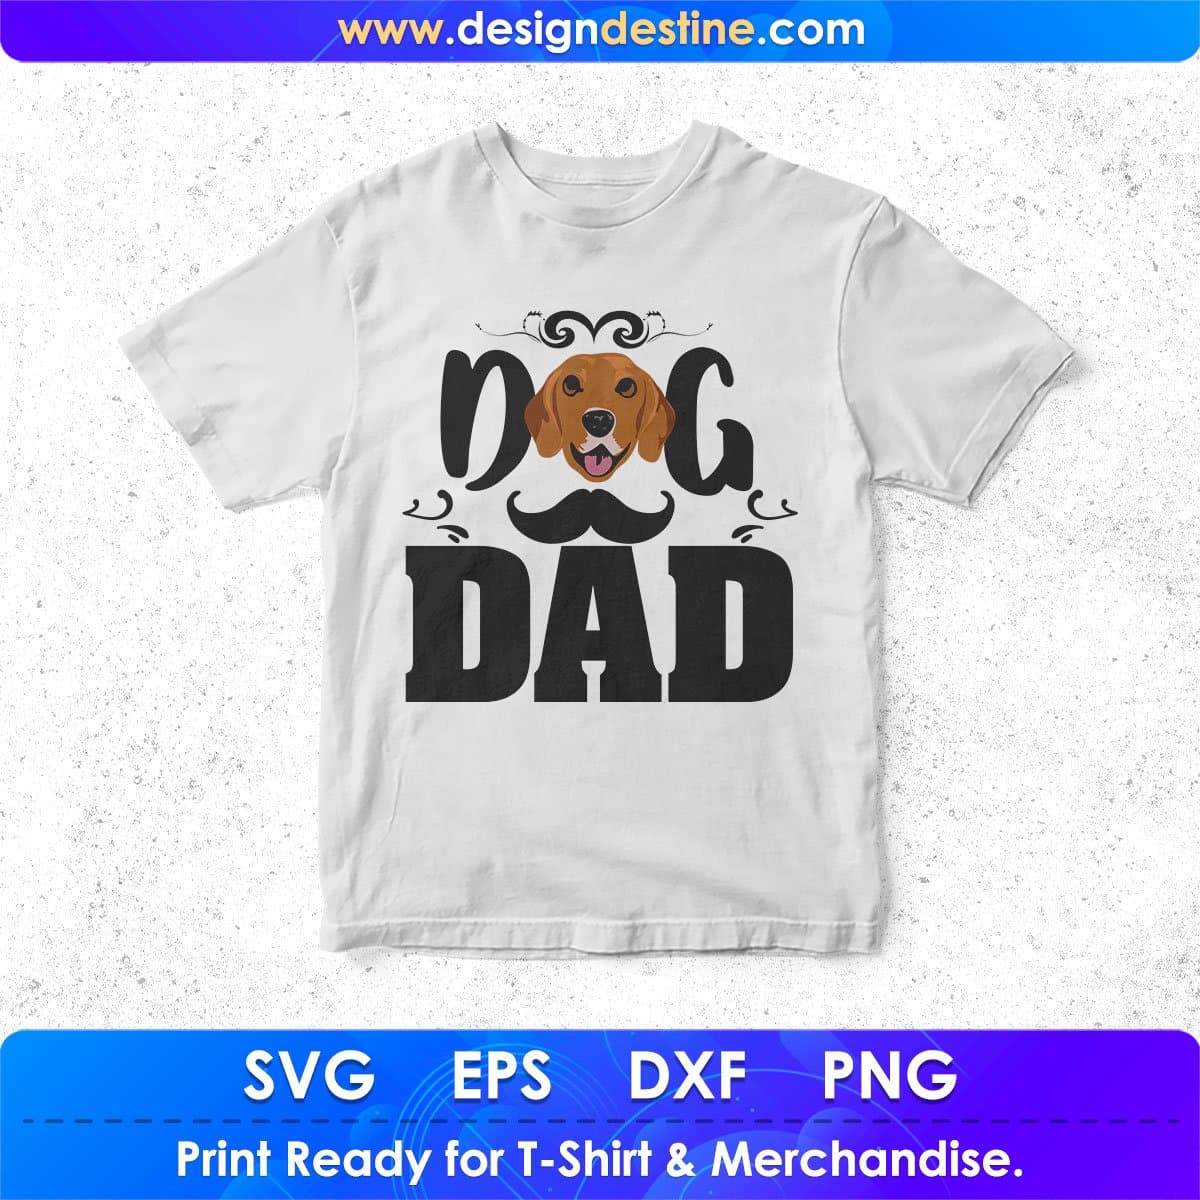 Dog Dad Animal T shirt Design In Svg Png Cutting Printable Files